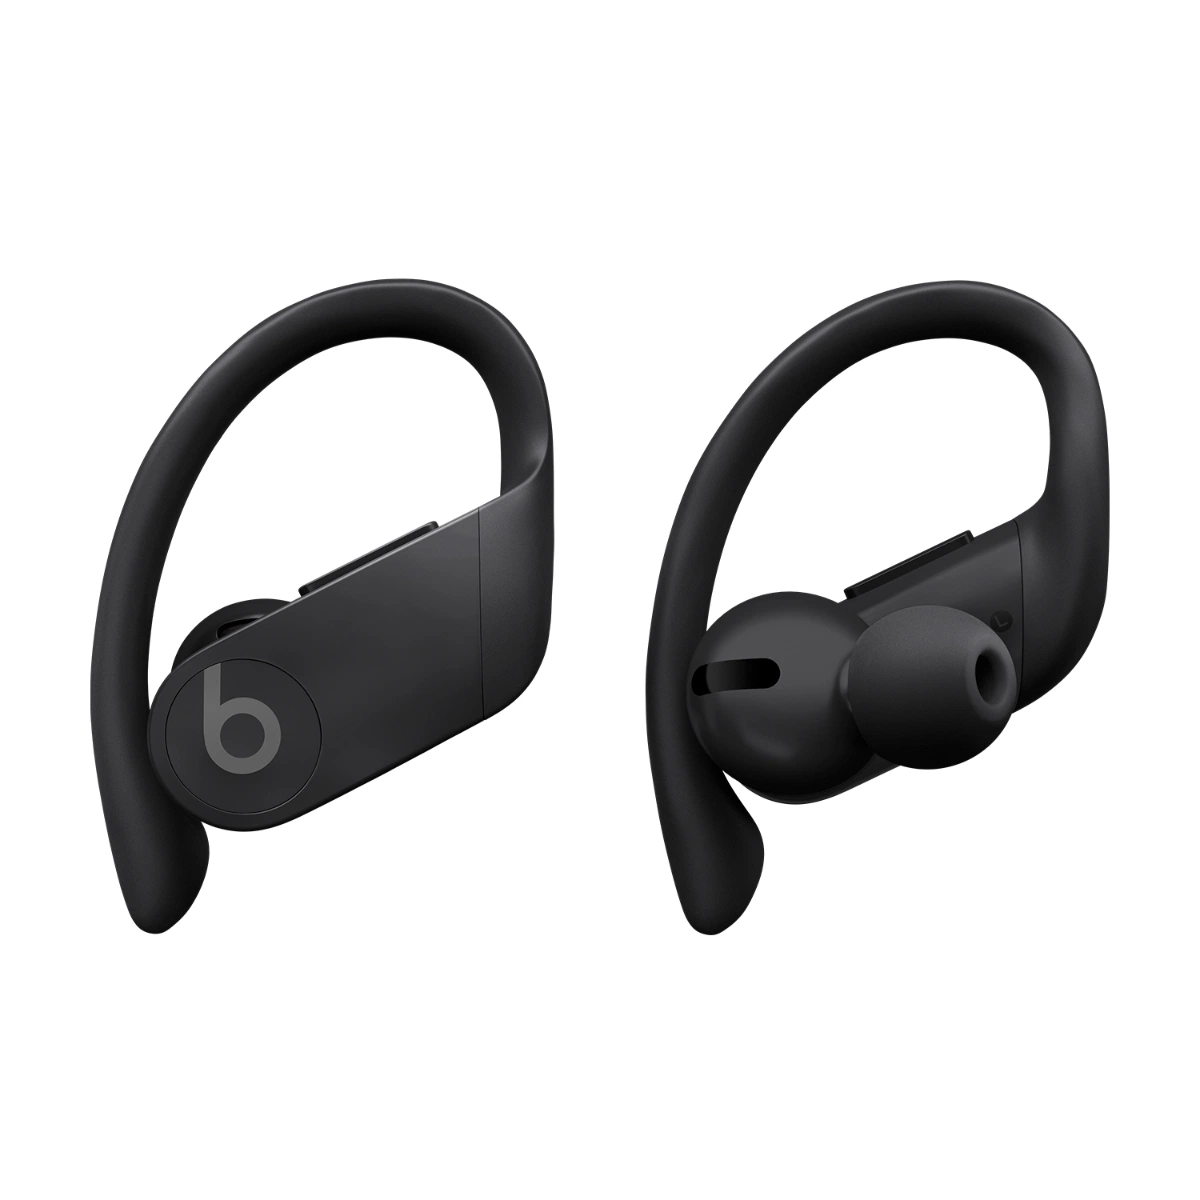 Popular Earbuds Bluetooth Earphones Wireless Headphones in-Ear Headset Headphone Case Cover for Powerbeats PRO